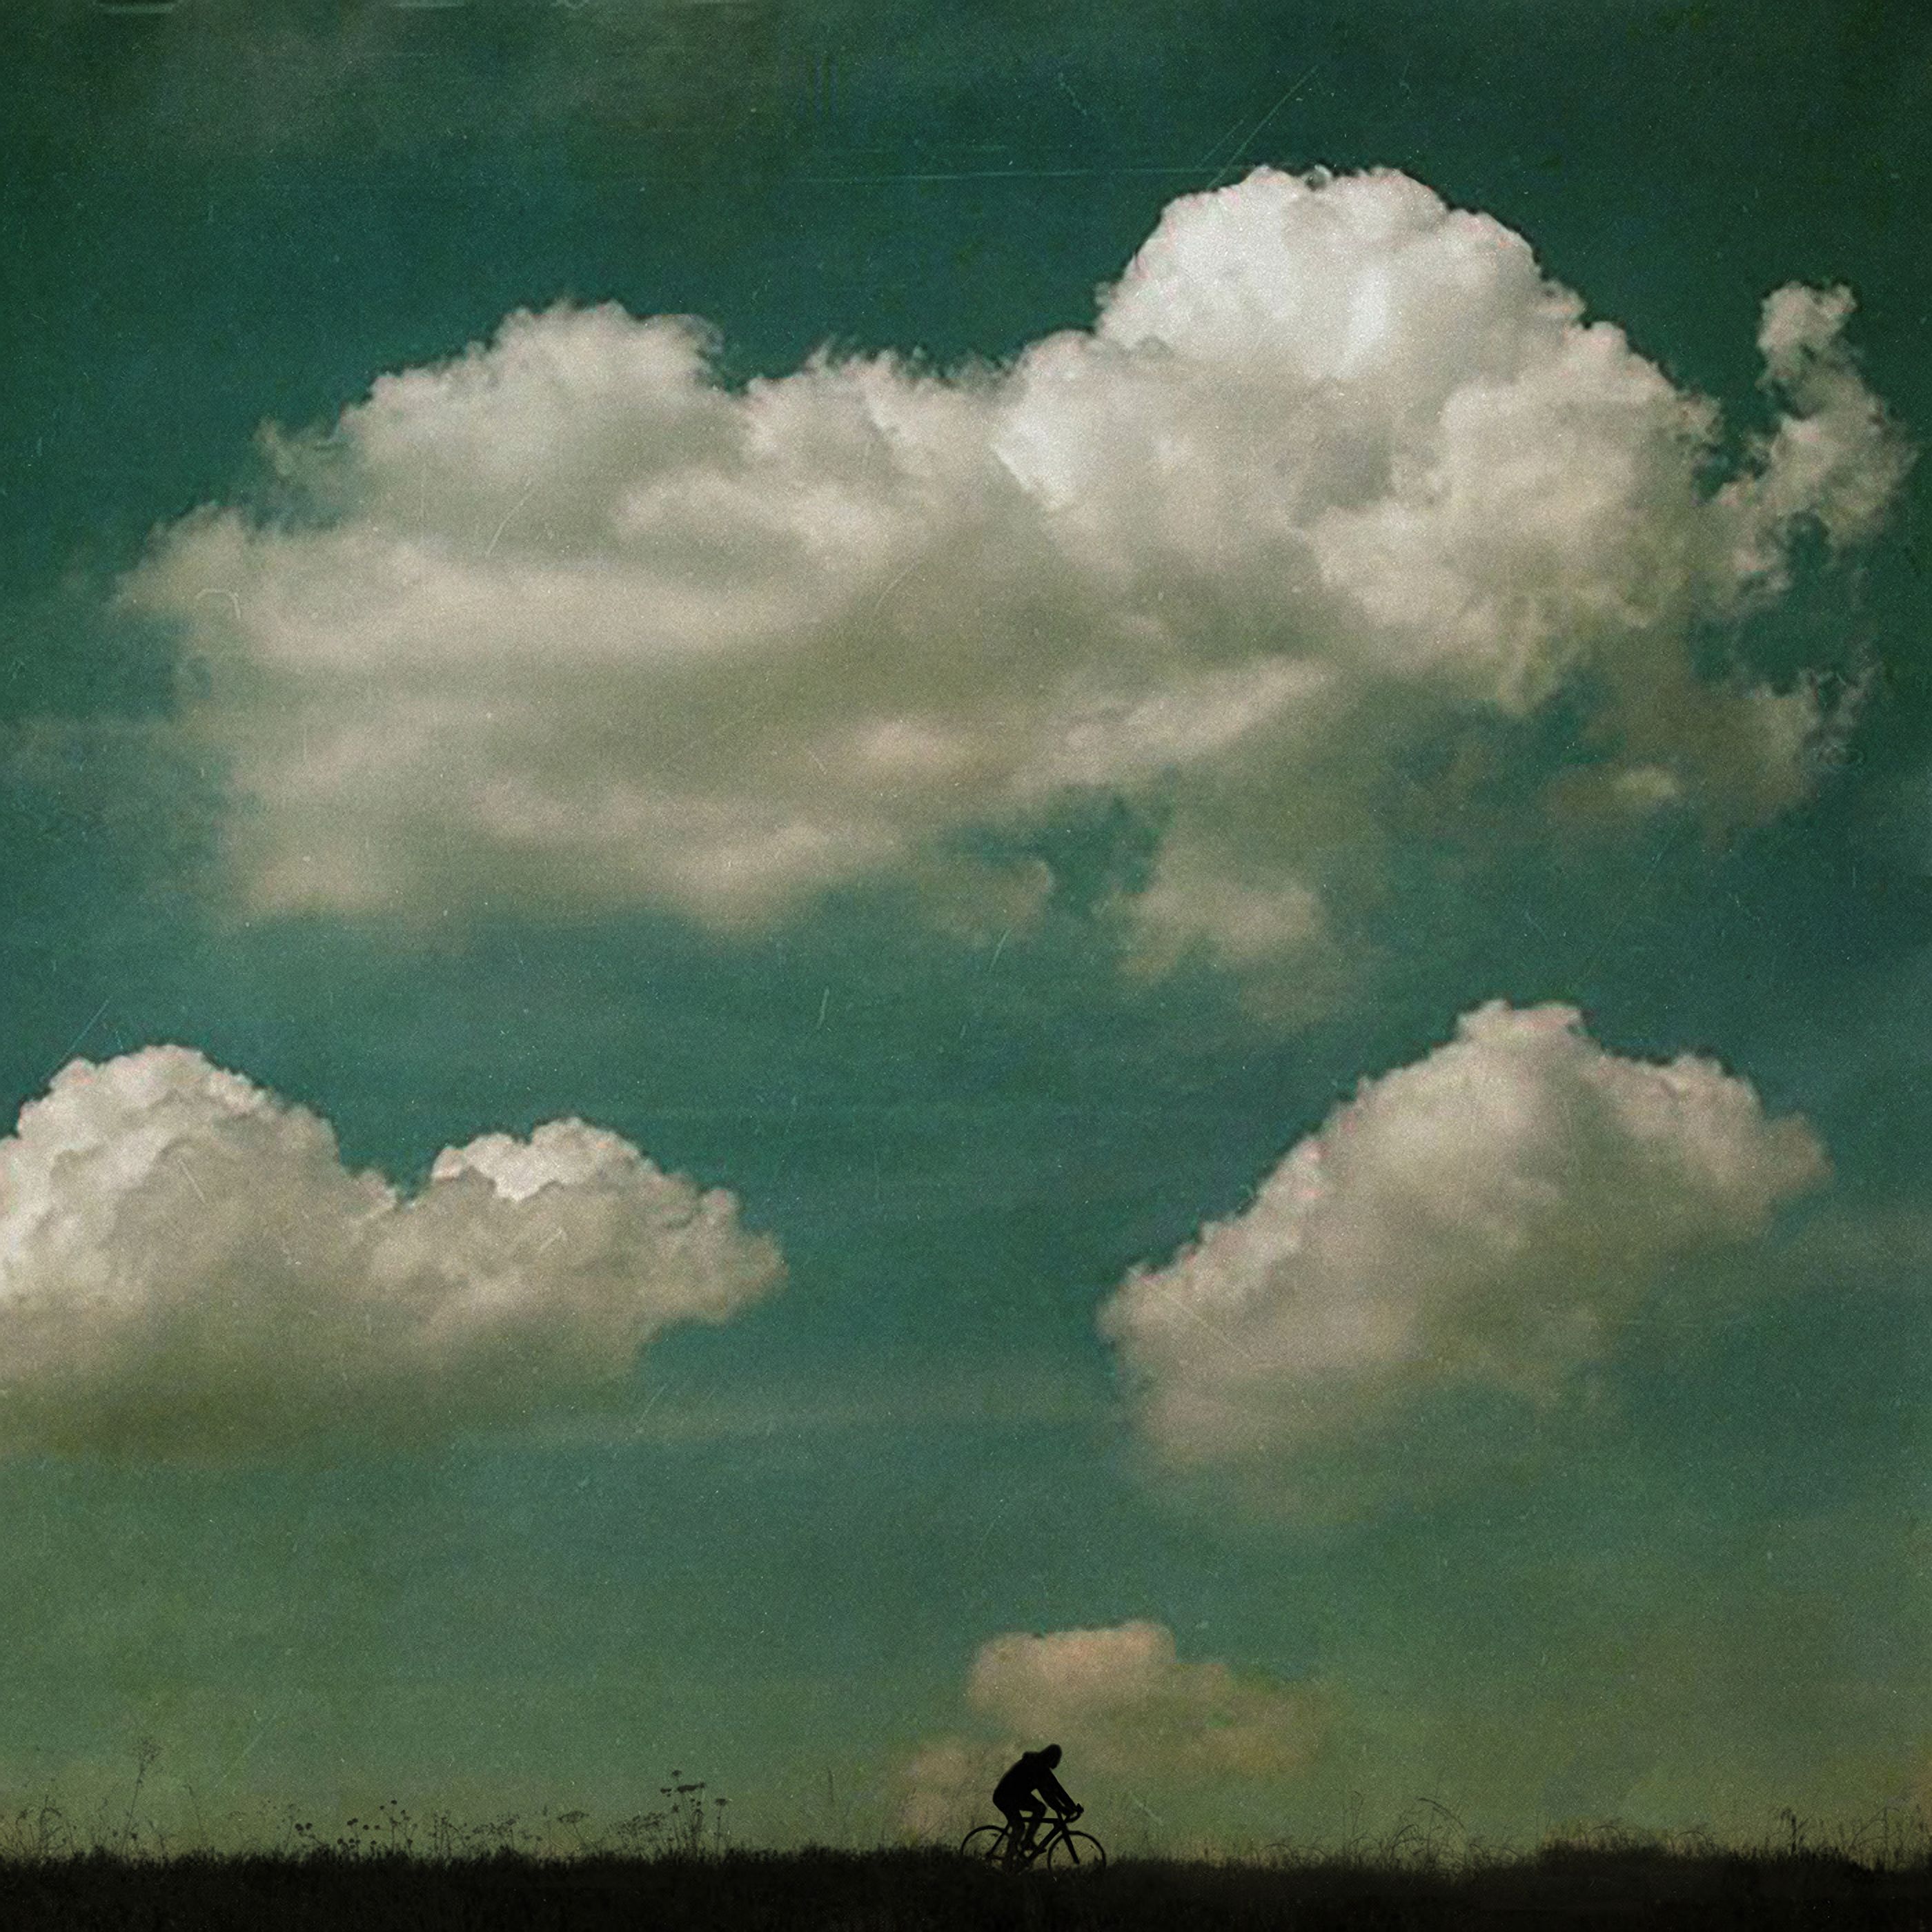 art, cyclist, sky, clouds, silhouette